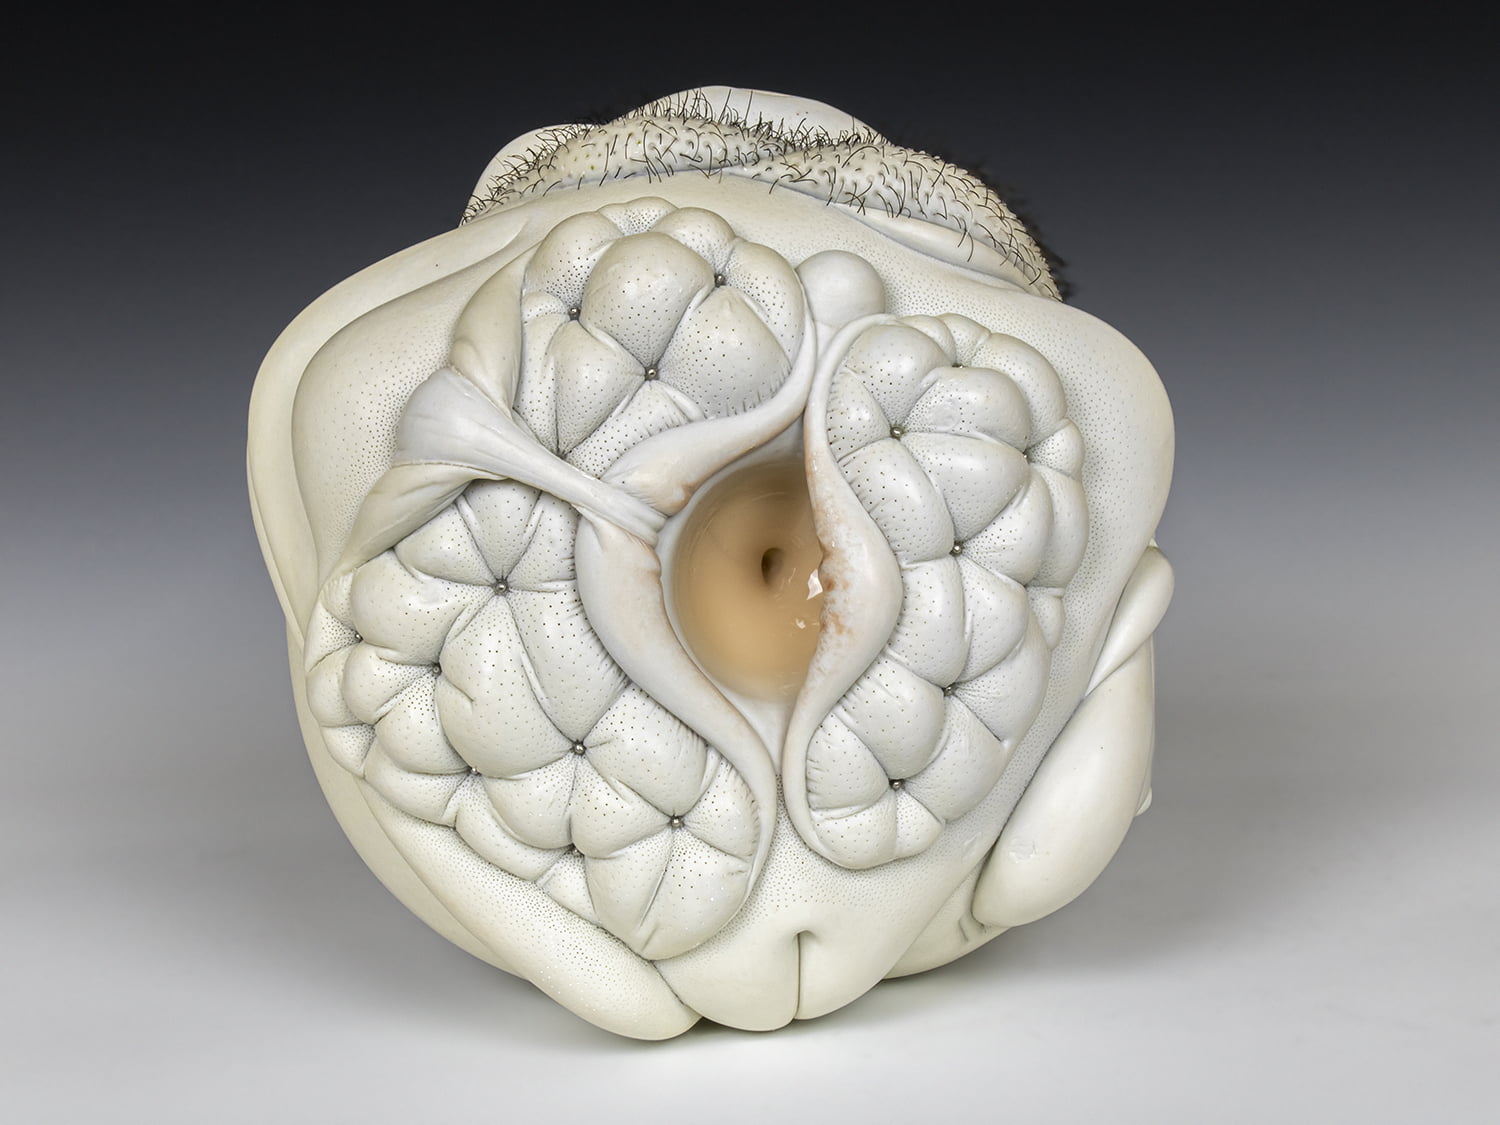 Jason Briggs "Royal" (detail 5). porcelain and mixed media sculpture ceramics.